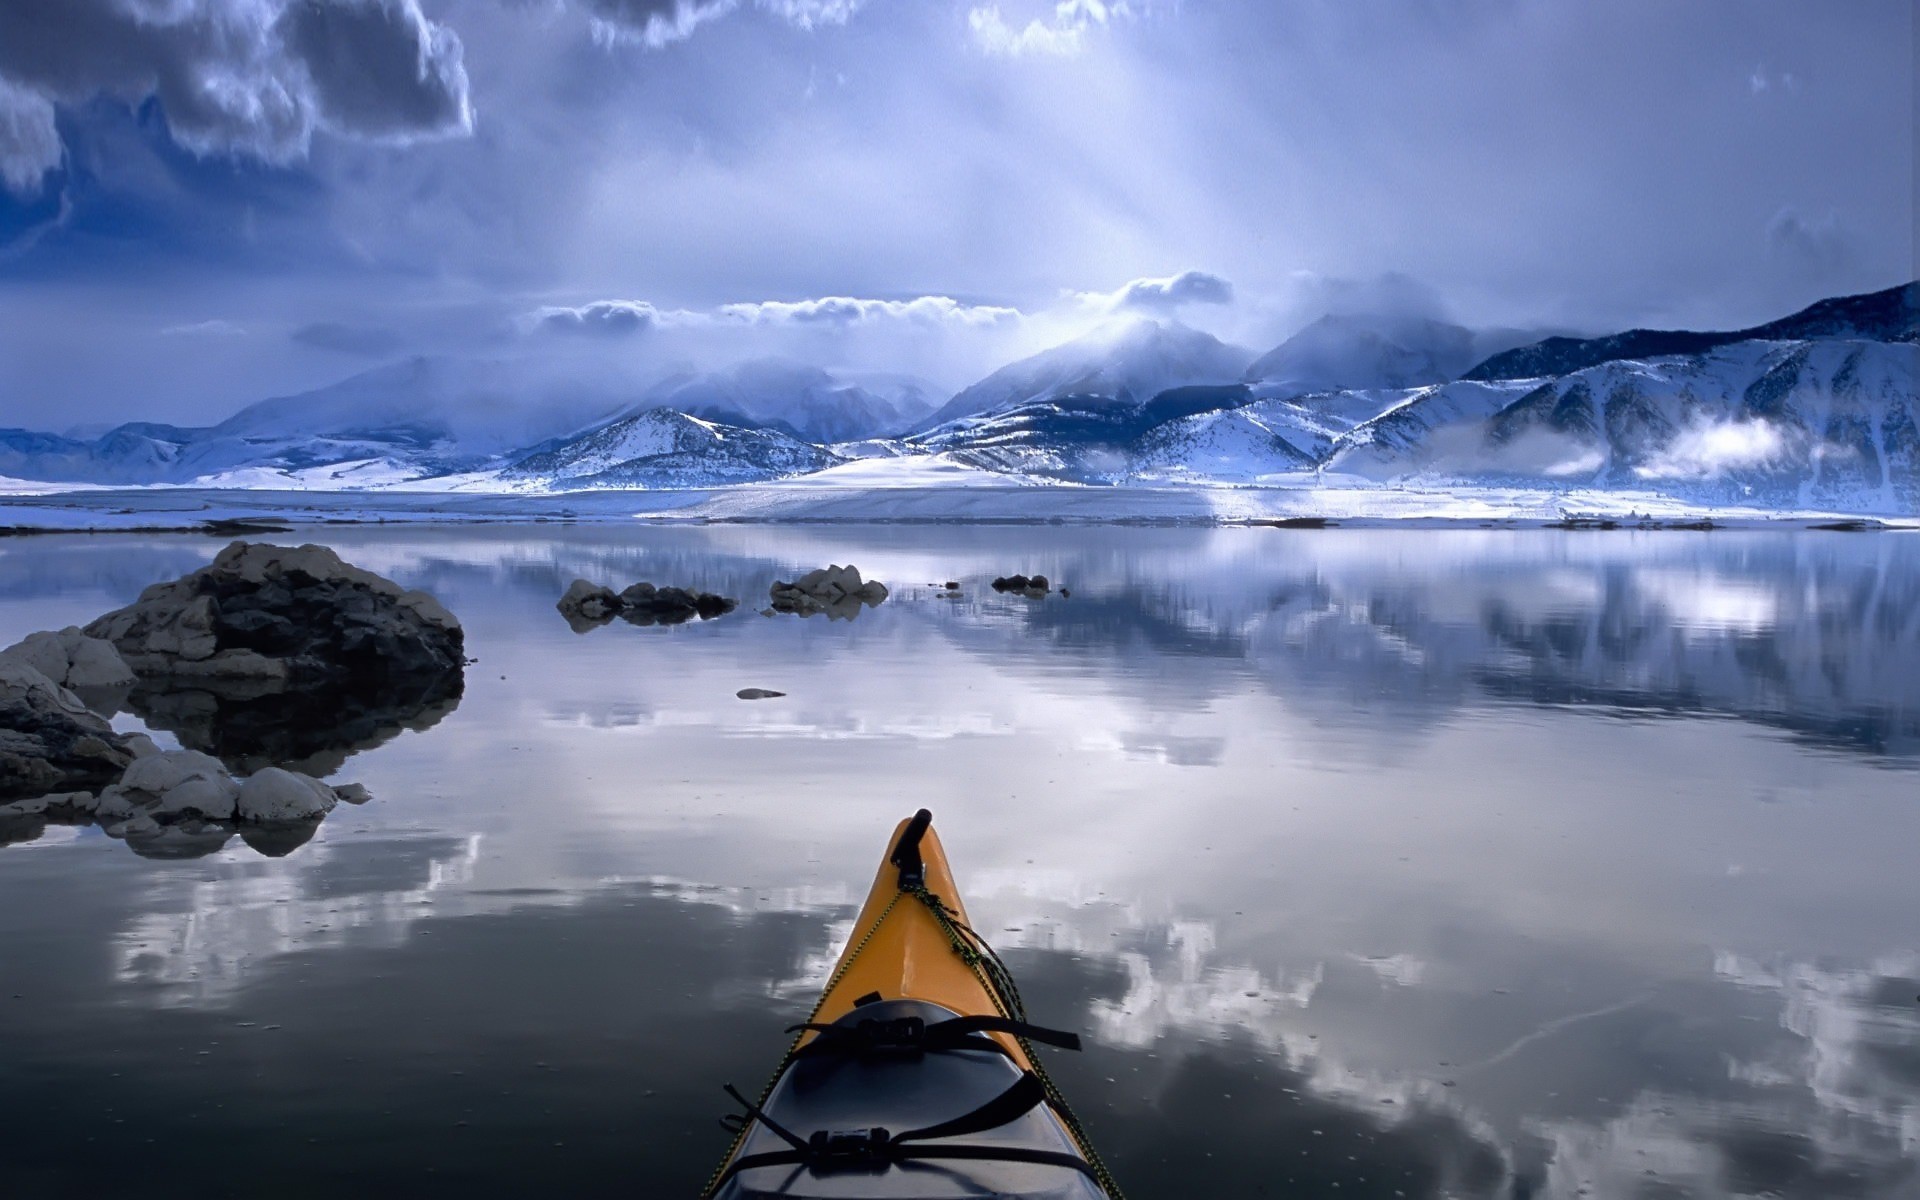 mountains, winter, snow, California, lakes, kayak, Mono Lake - desktop wallpaper